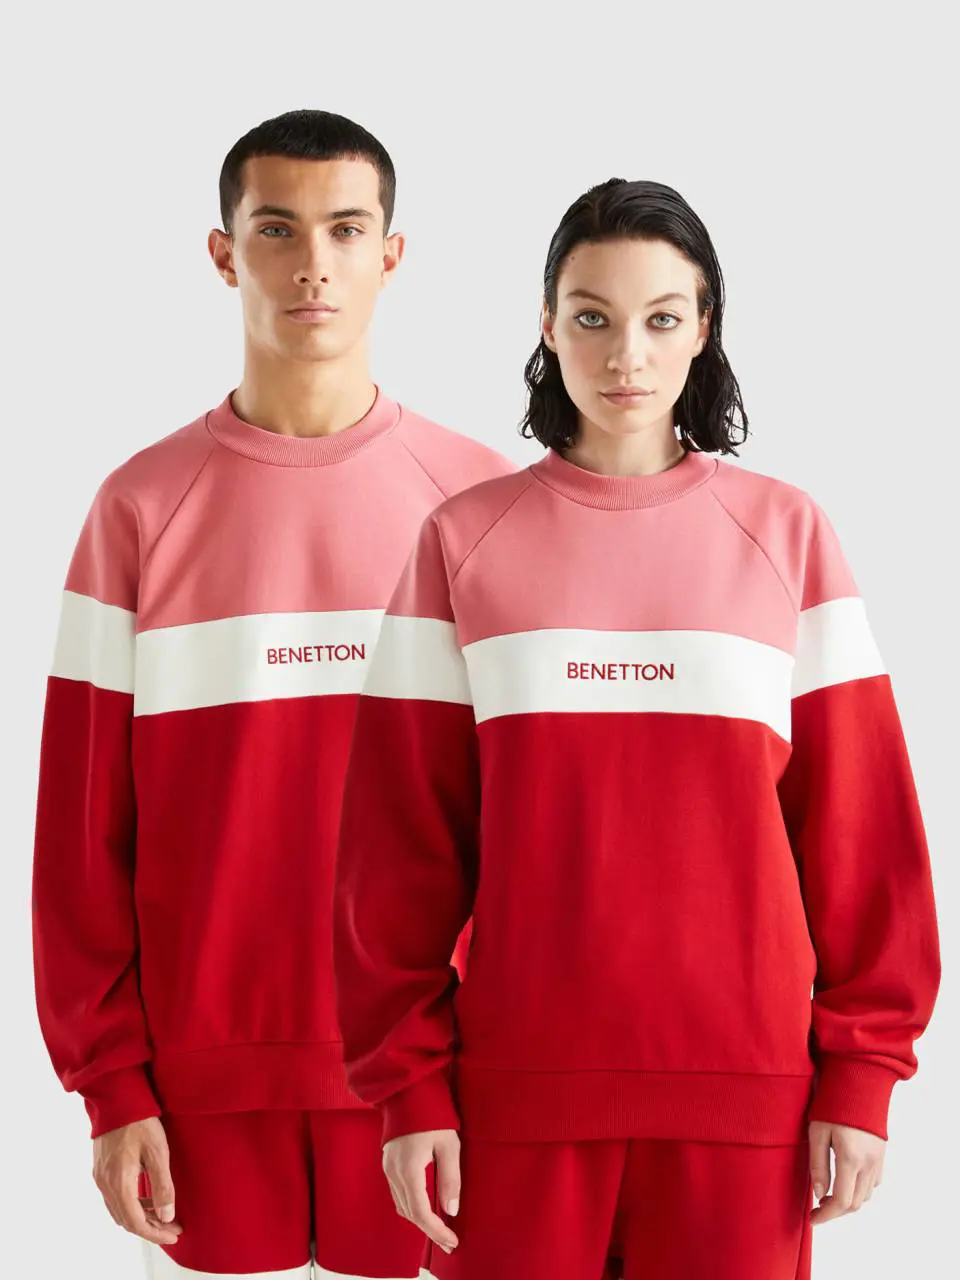 Benetton pink and red sweatshirt. 1